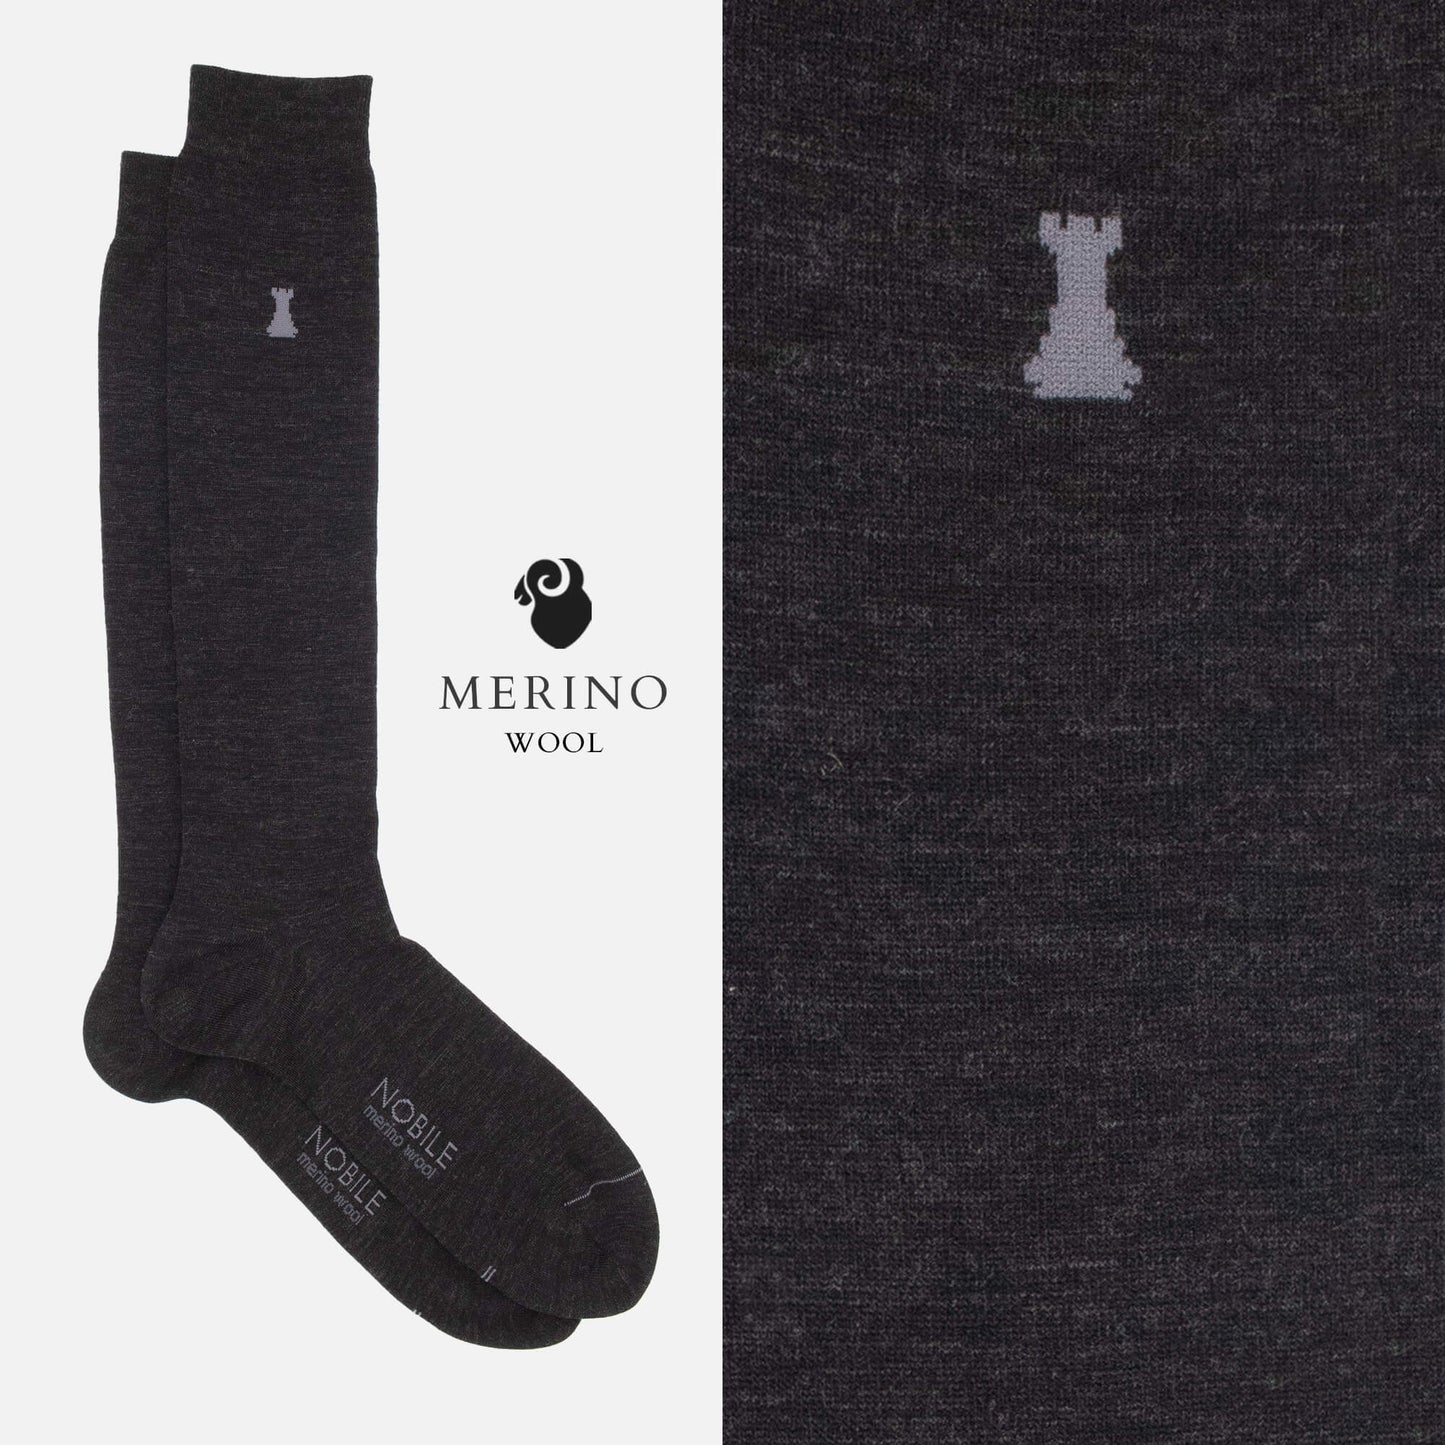 Merino Basic - Box of 6 knee high socks in solid color Merino wool